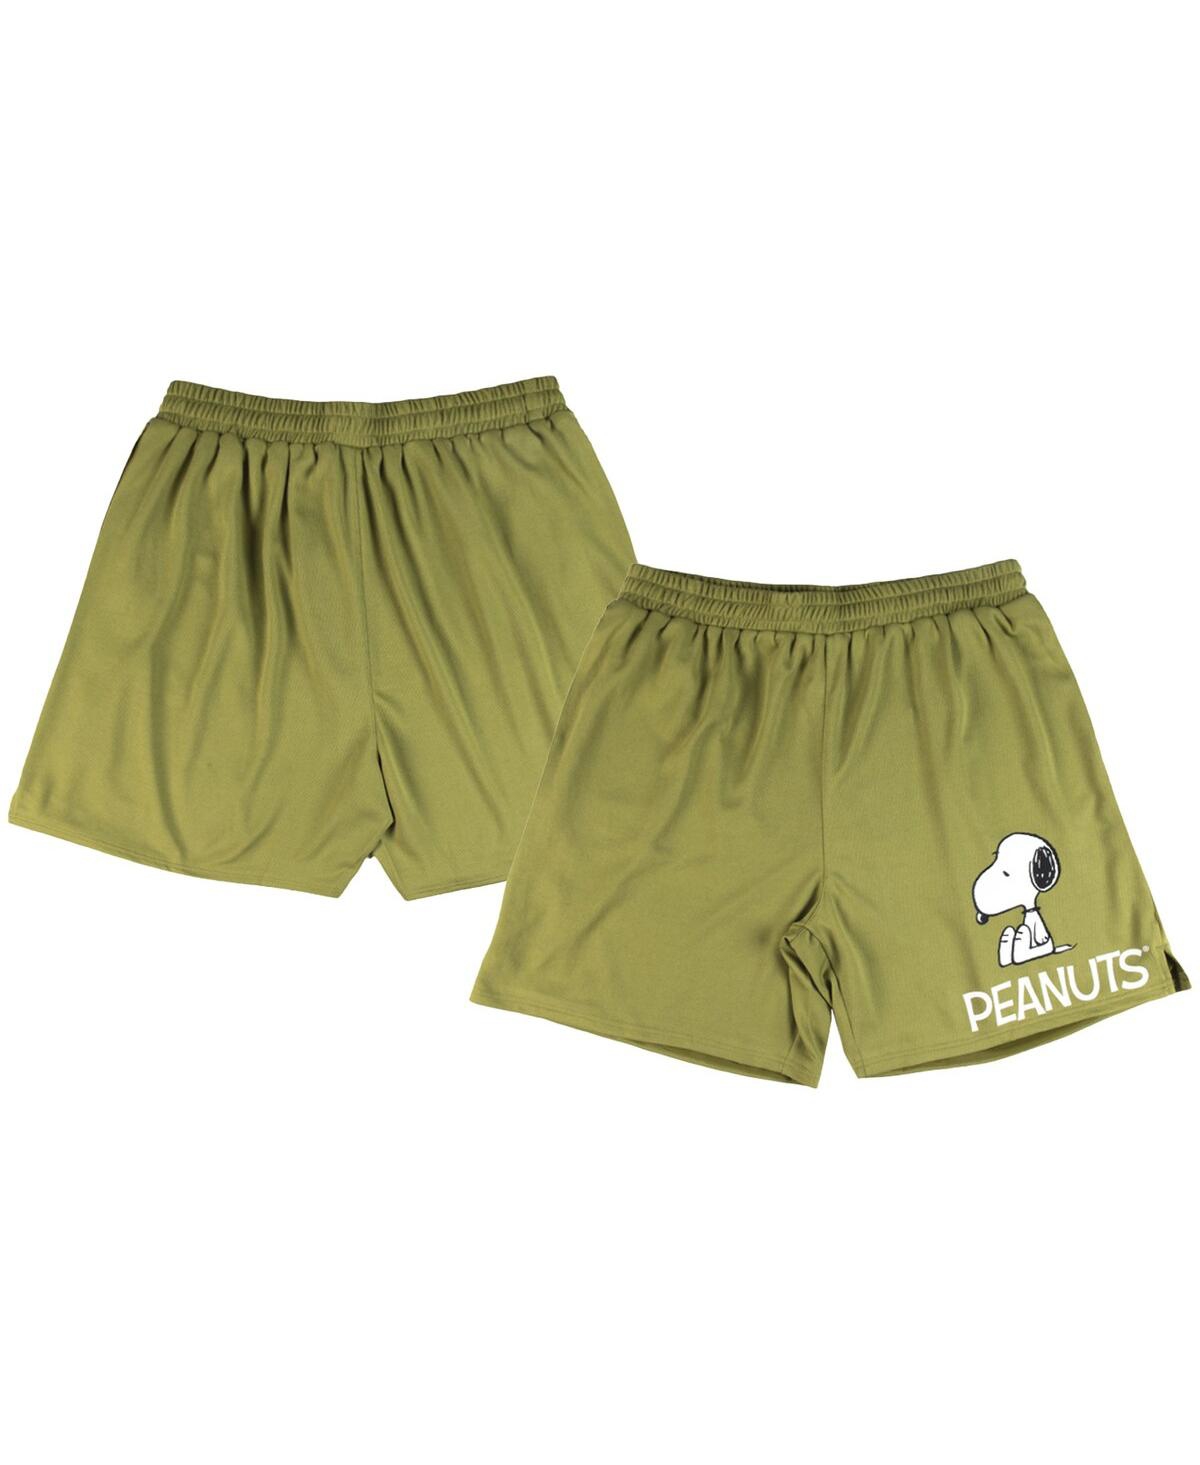 Men's Olive Peanuts Snoopy Mesh Shorts - Olive